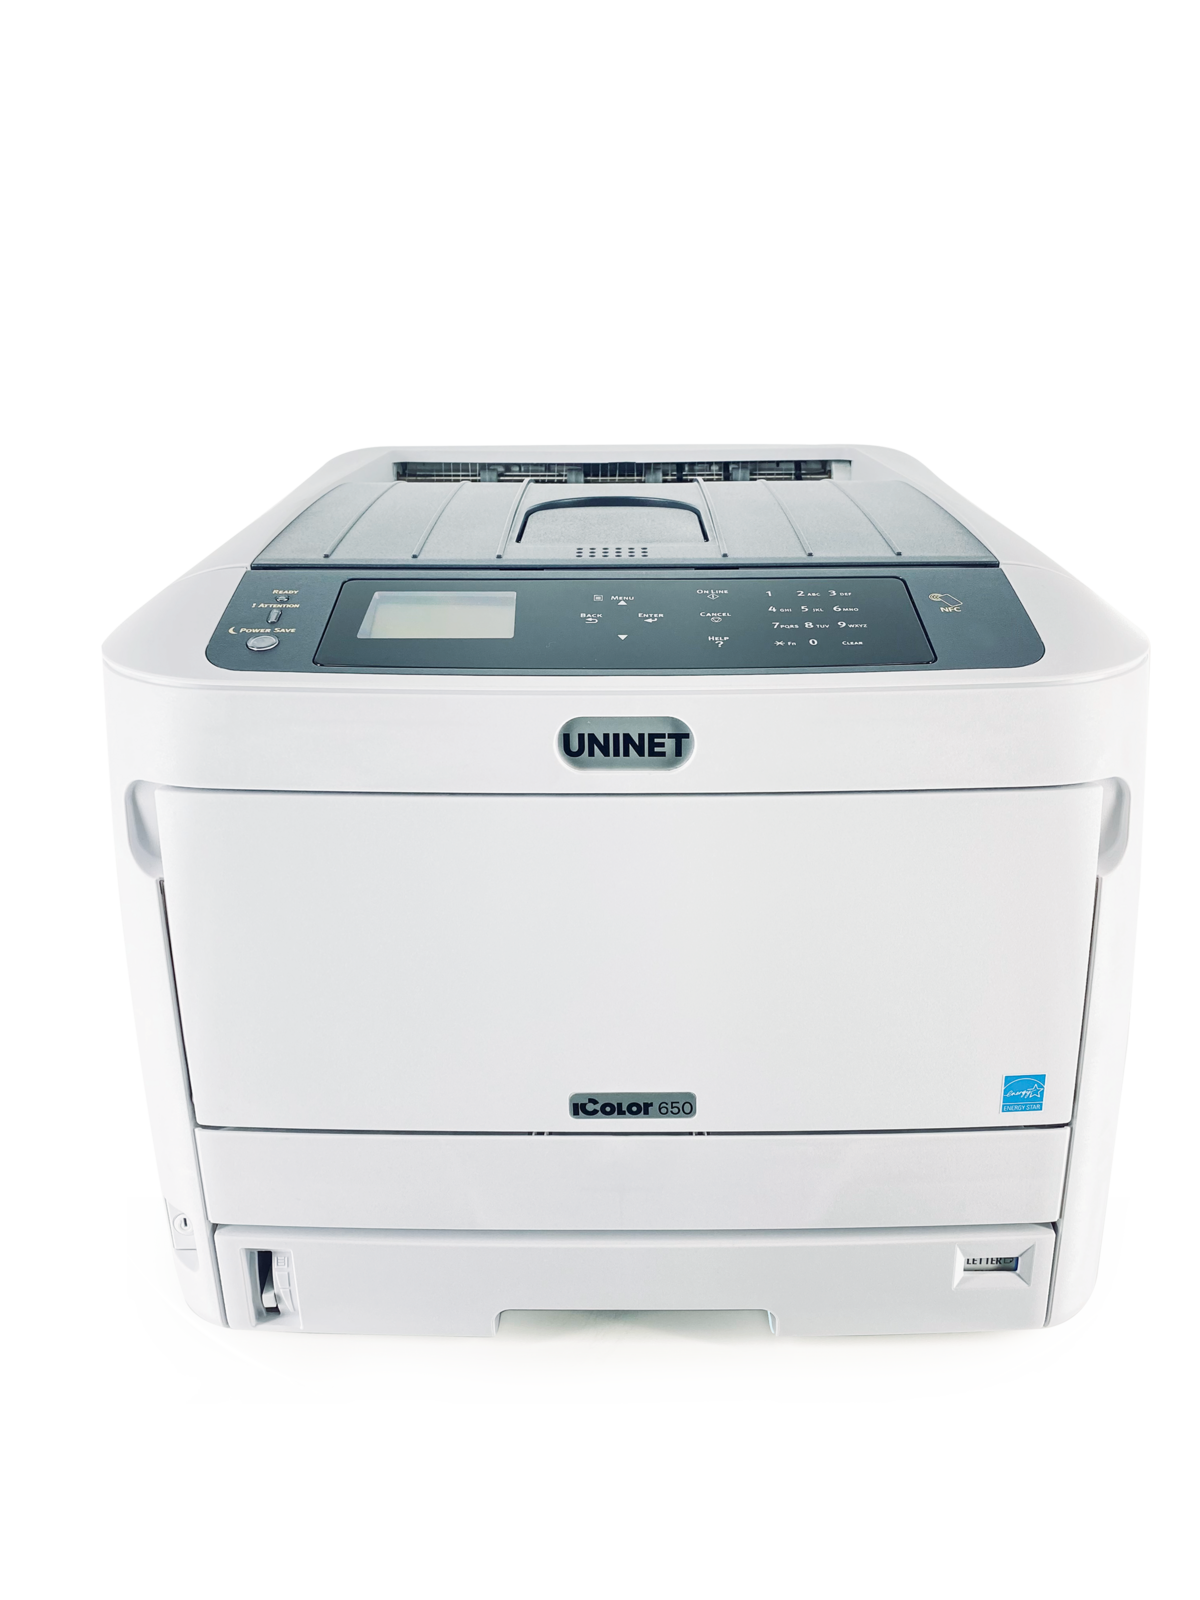 herida Hacer Nublado Uninet IColor 650 Digital Color + White Transfer Media Printer